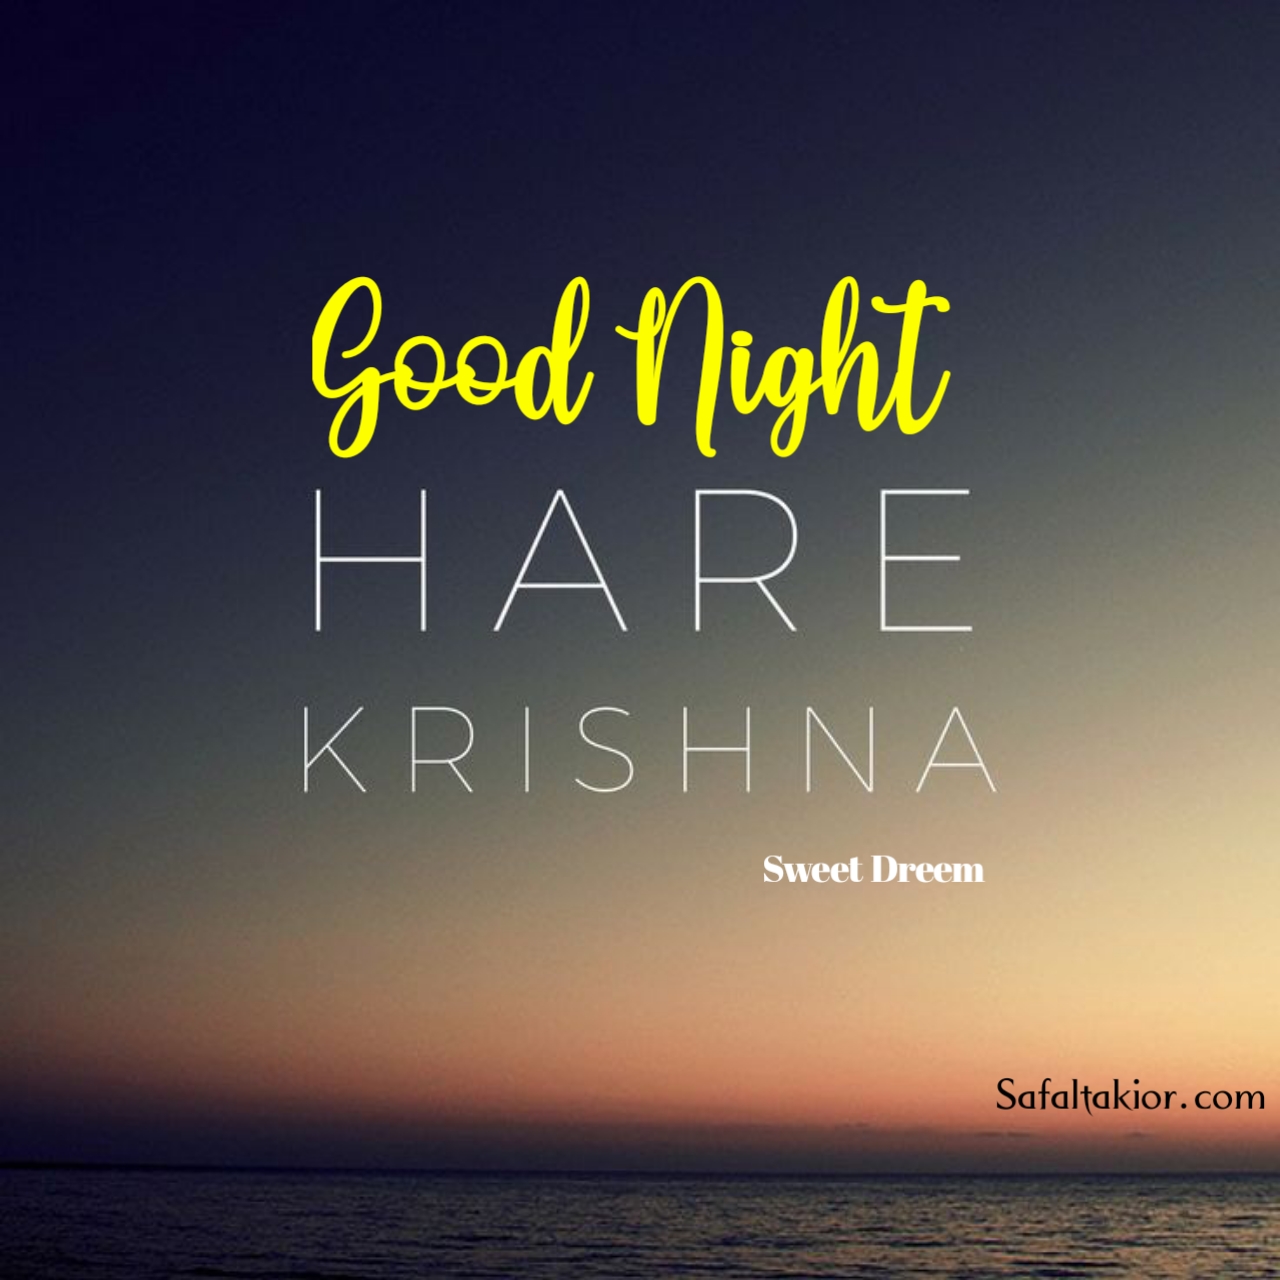 hare krishna good night images